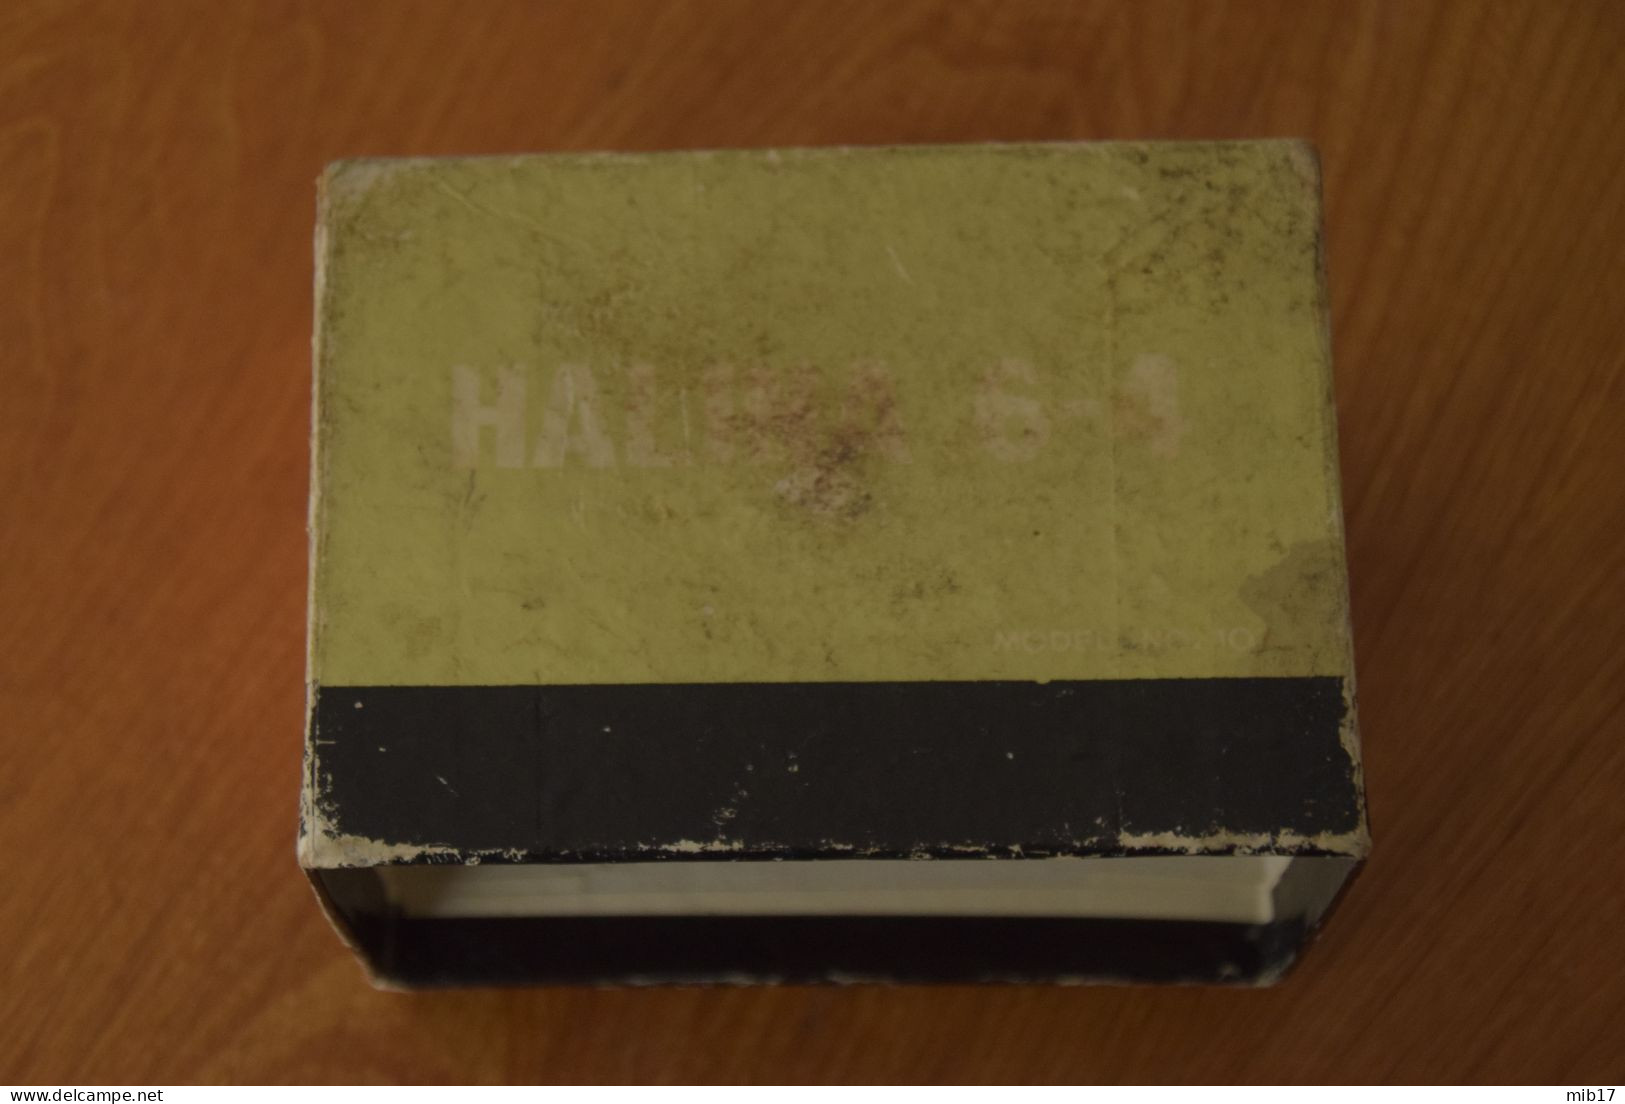 appareil photo ancien HAKING'S camera - HALINA 6-4 avec mode d'emploi en anglais et boite. film 120